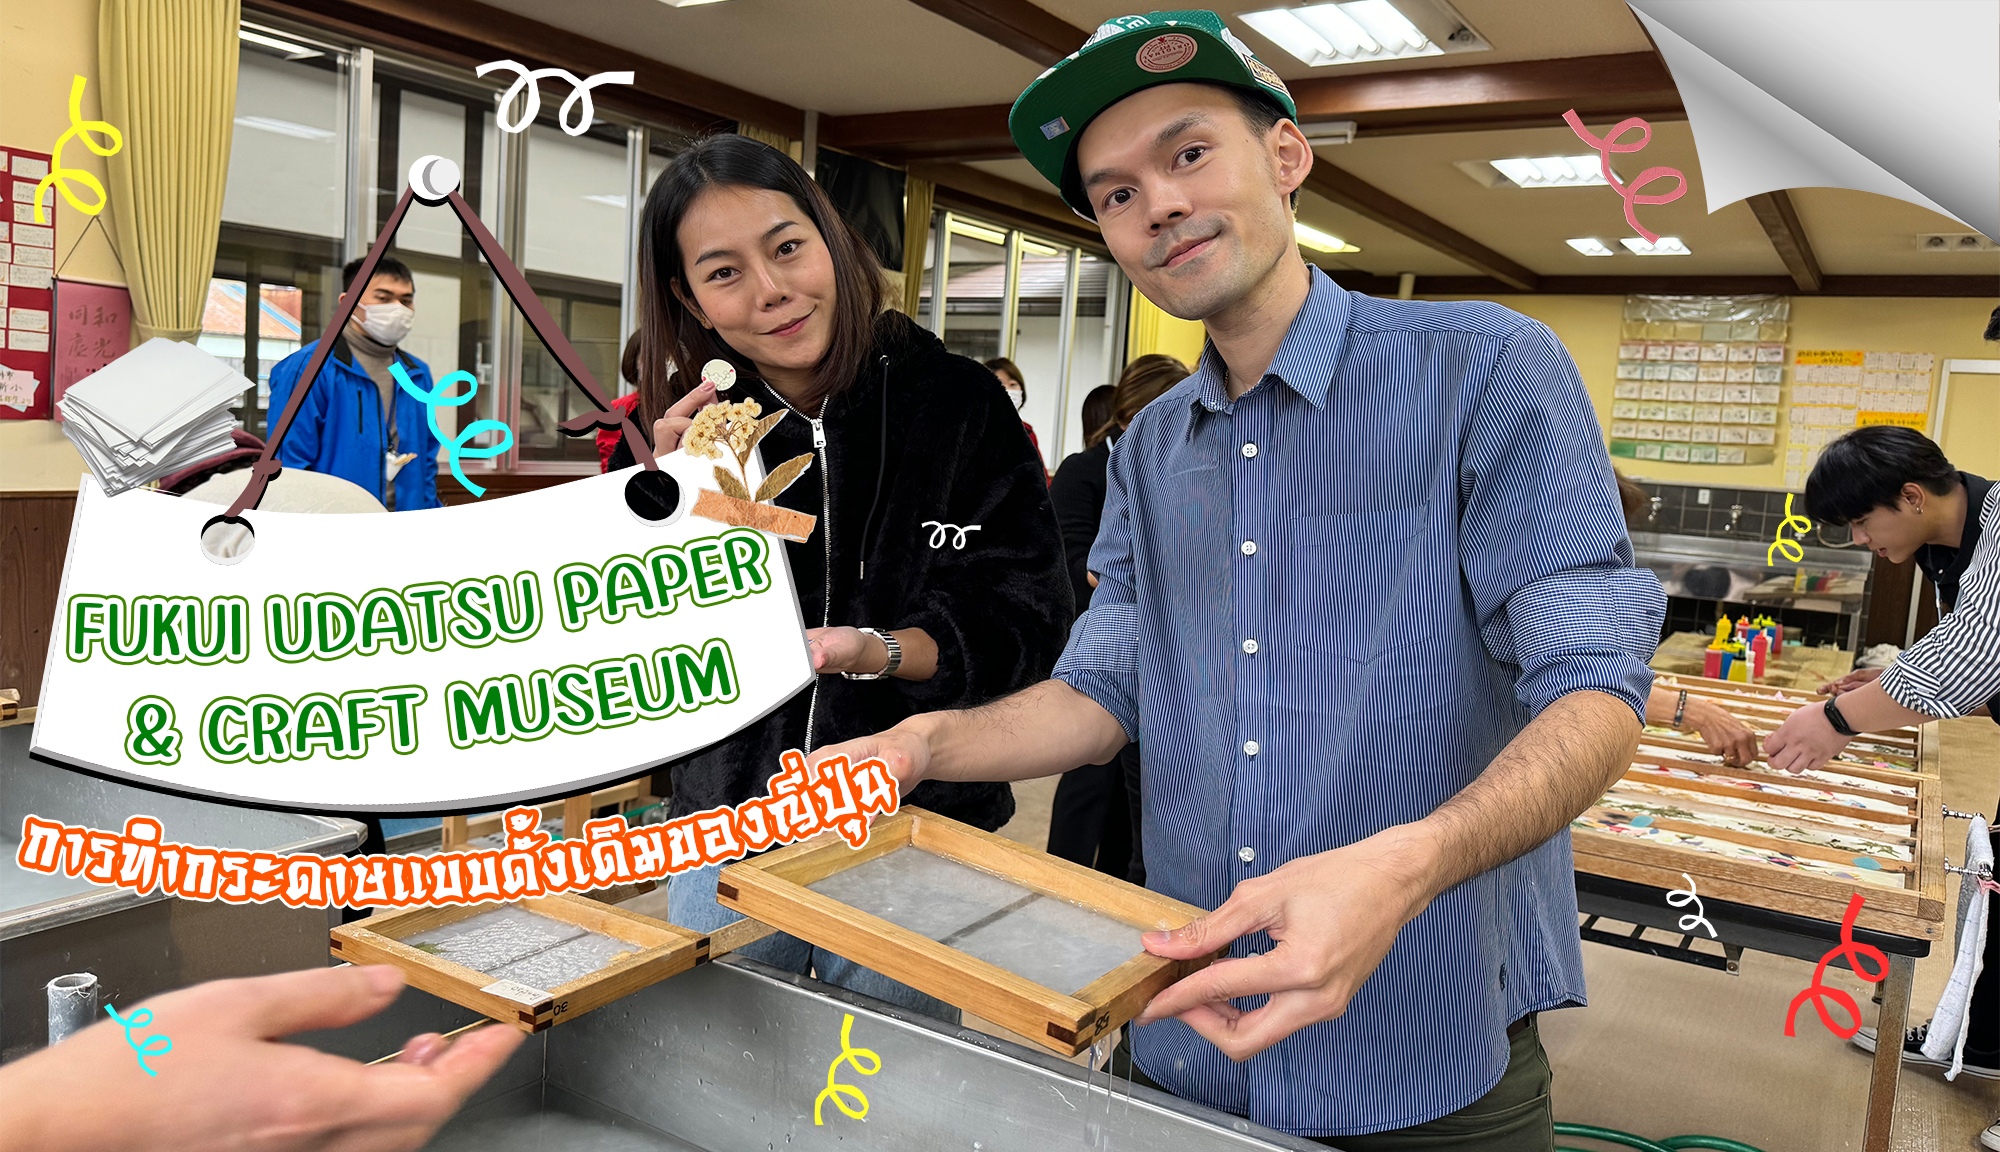 Fukui Udatsu paper & craft museum of Echizen washi Village : ทำกระดาษในแบบญี่ปุ่น